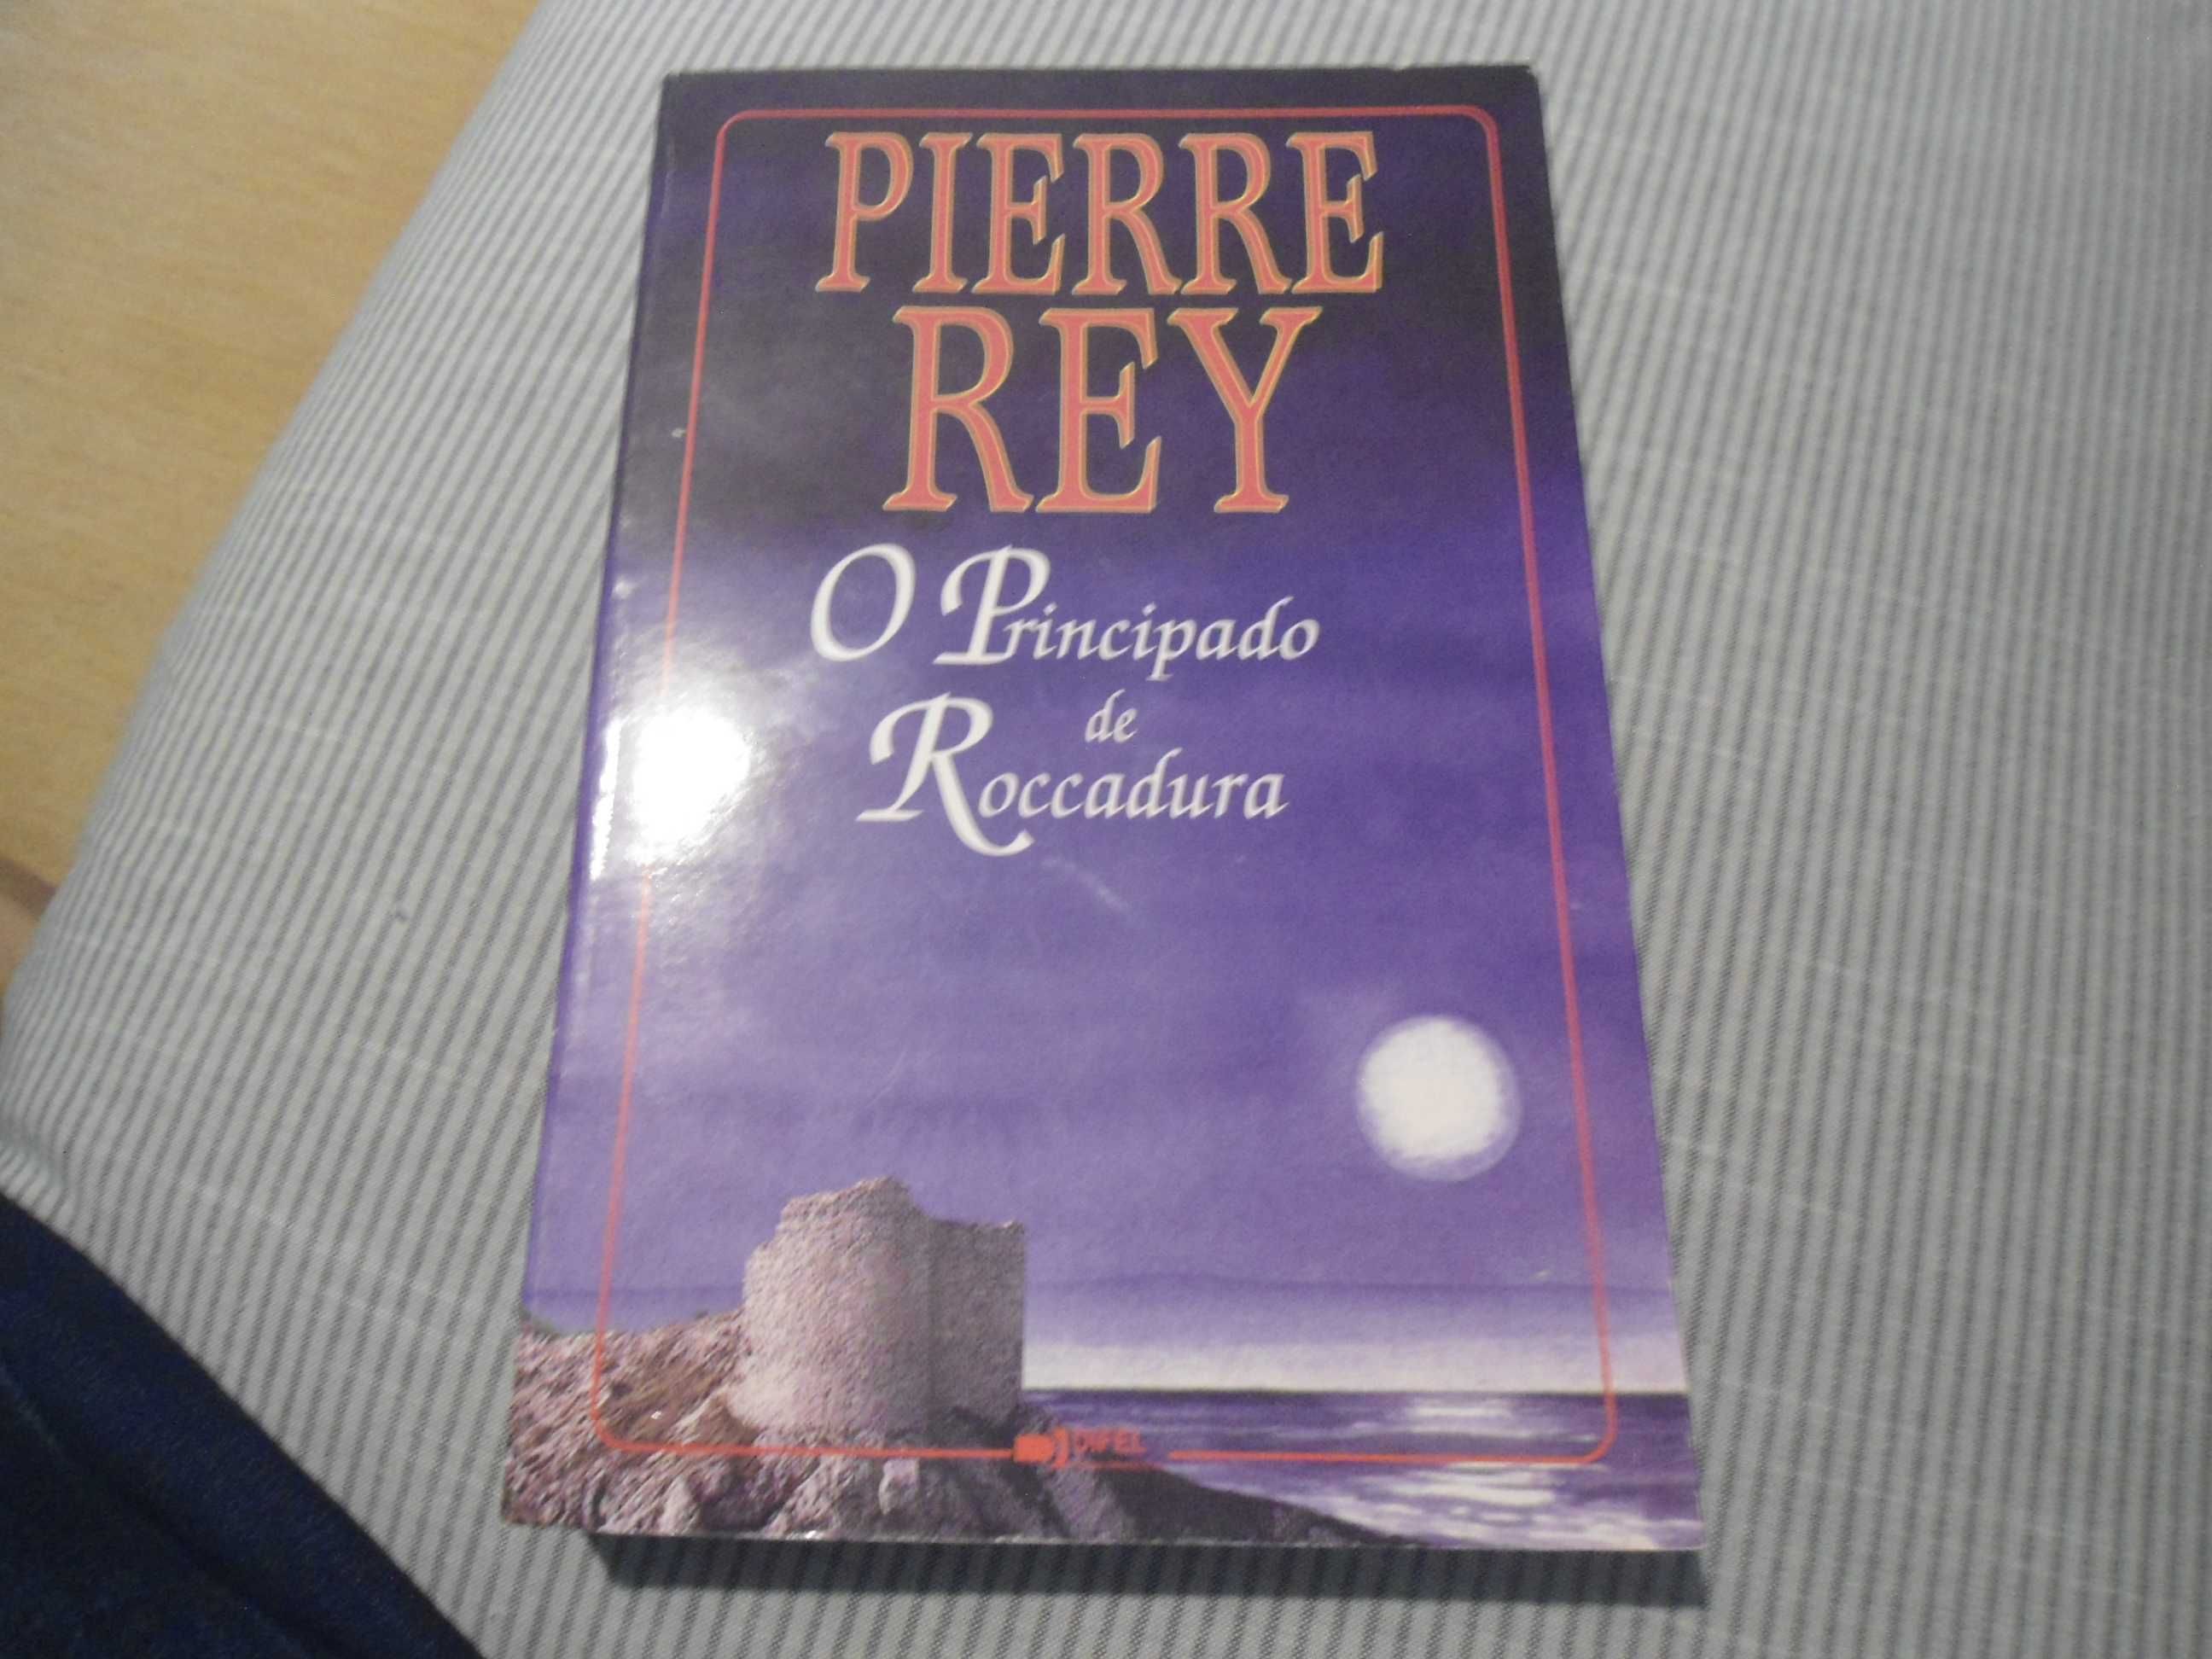 O Principado de Roccadura por Pierre Rey